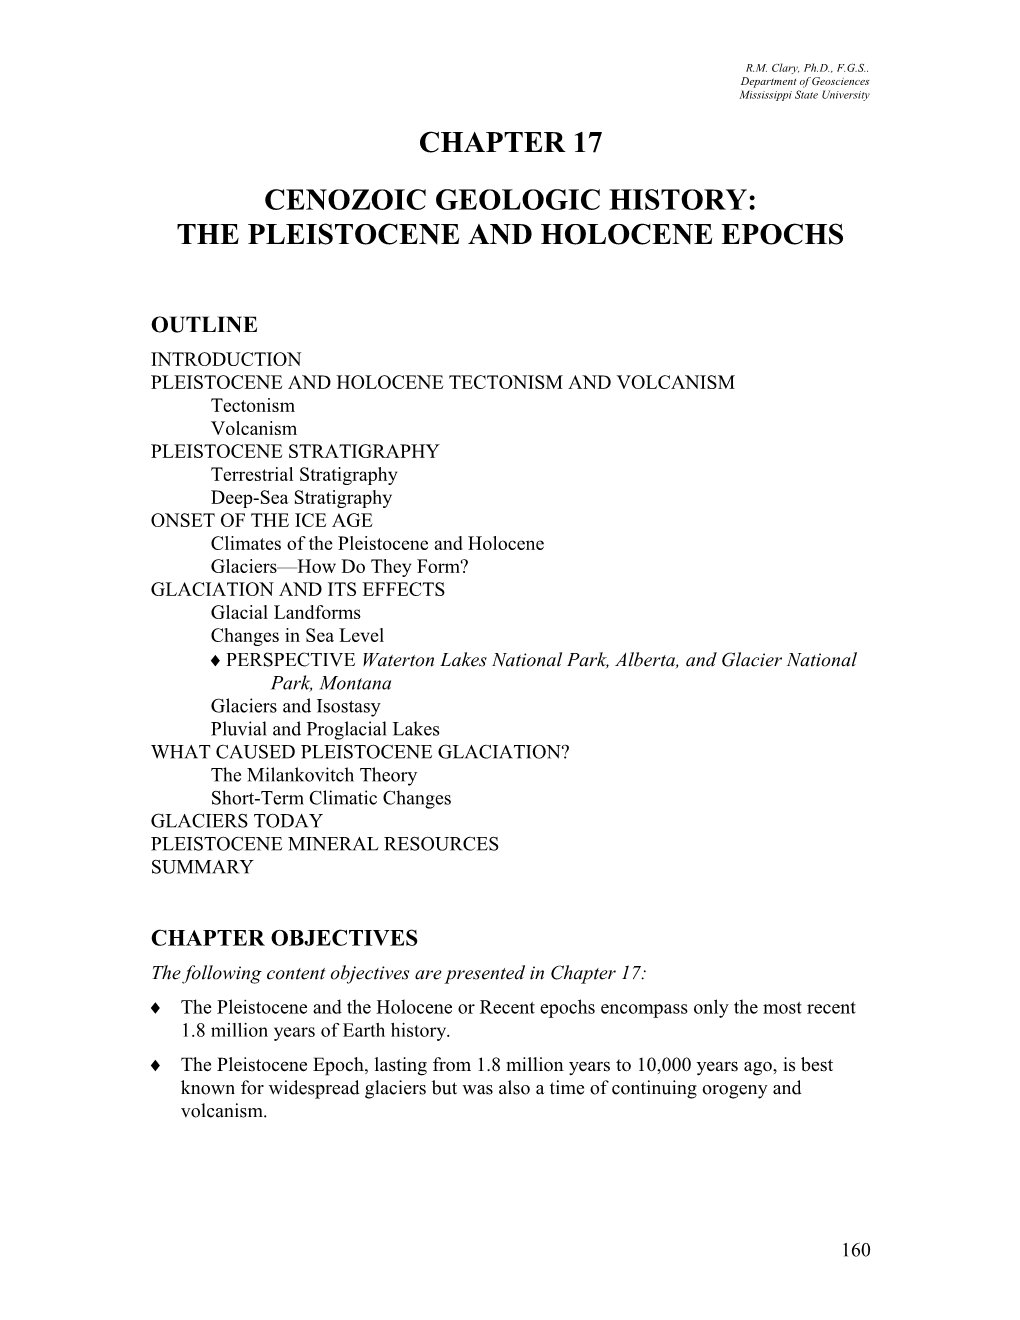 The Pleistocene and Holocene Epochs